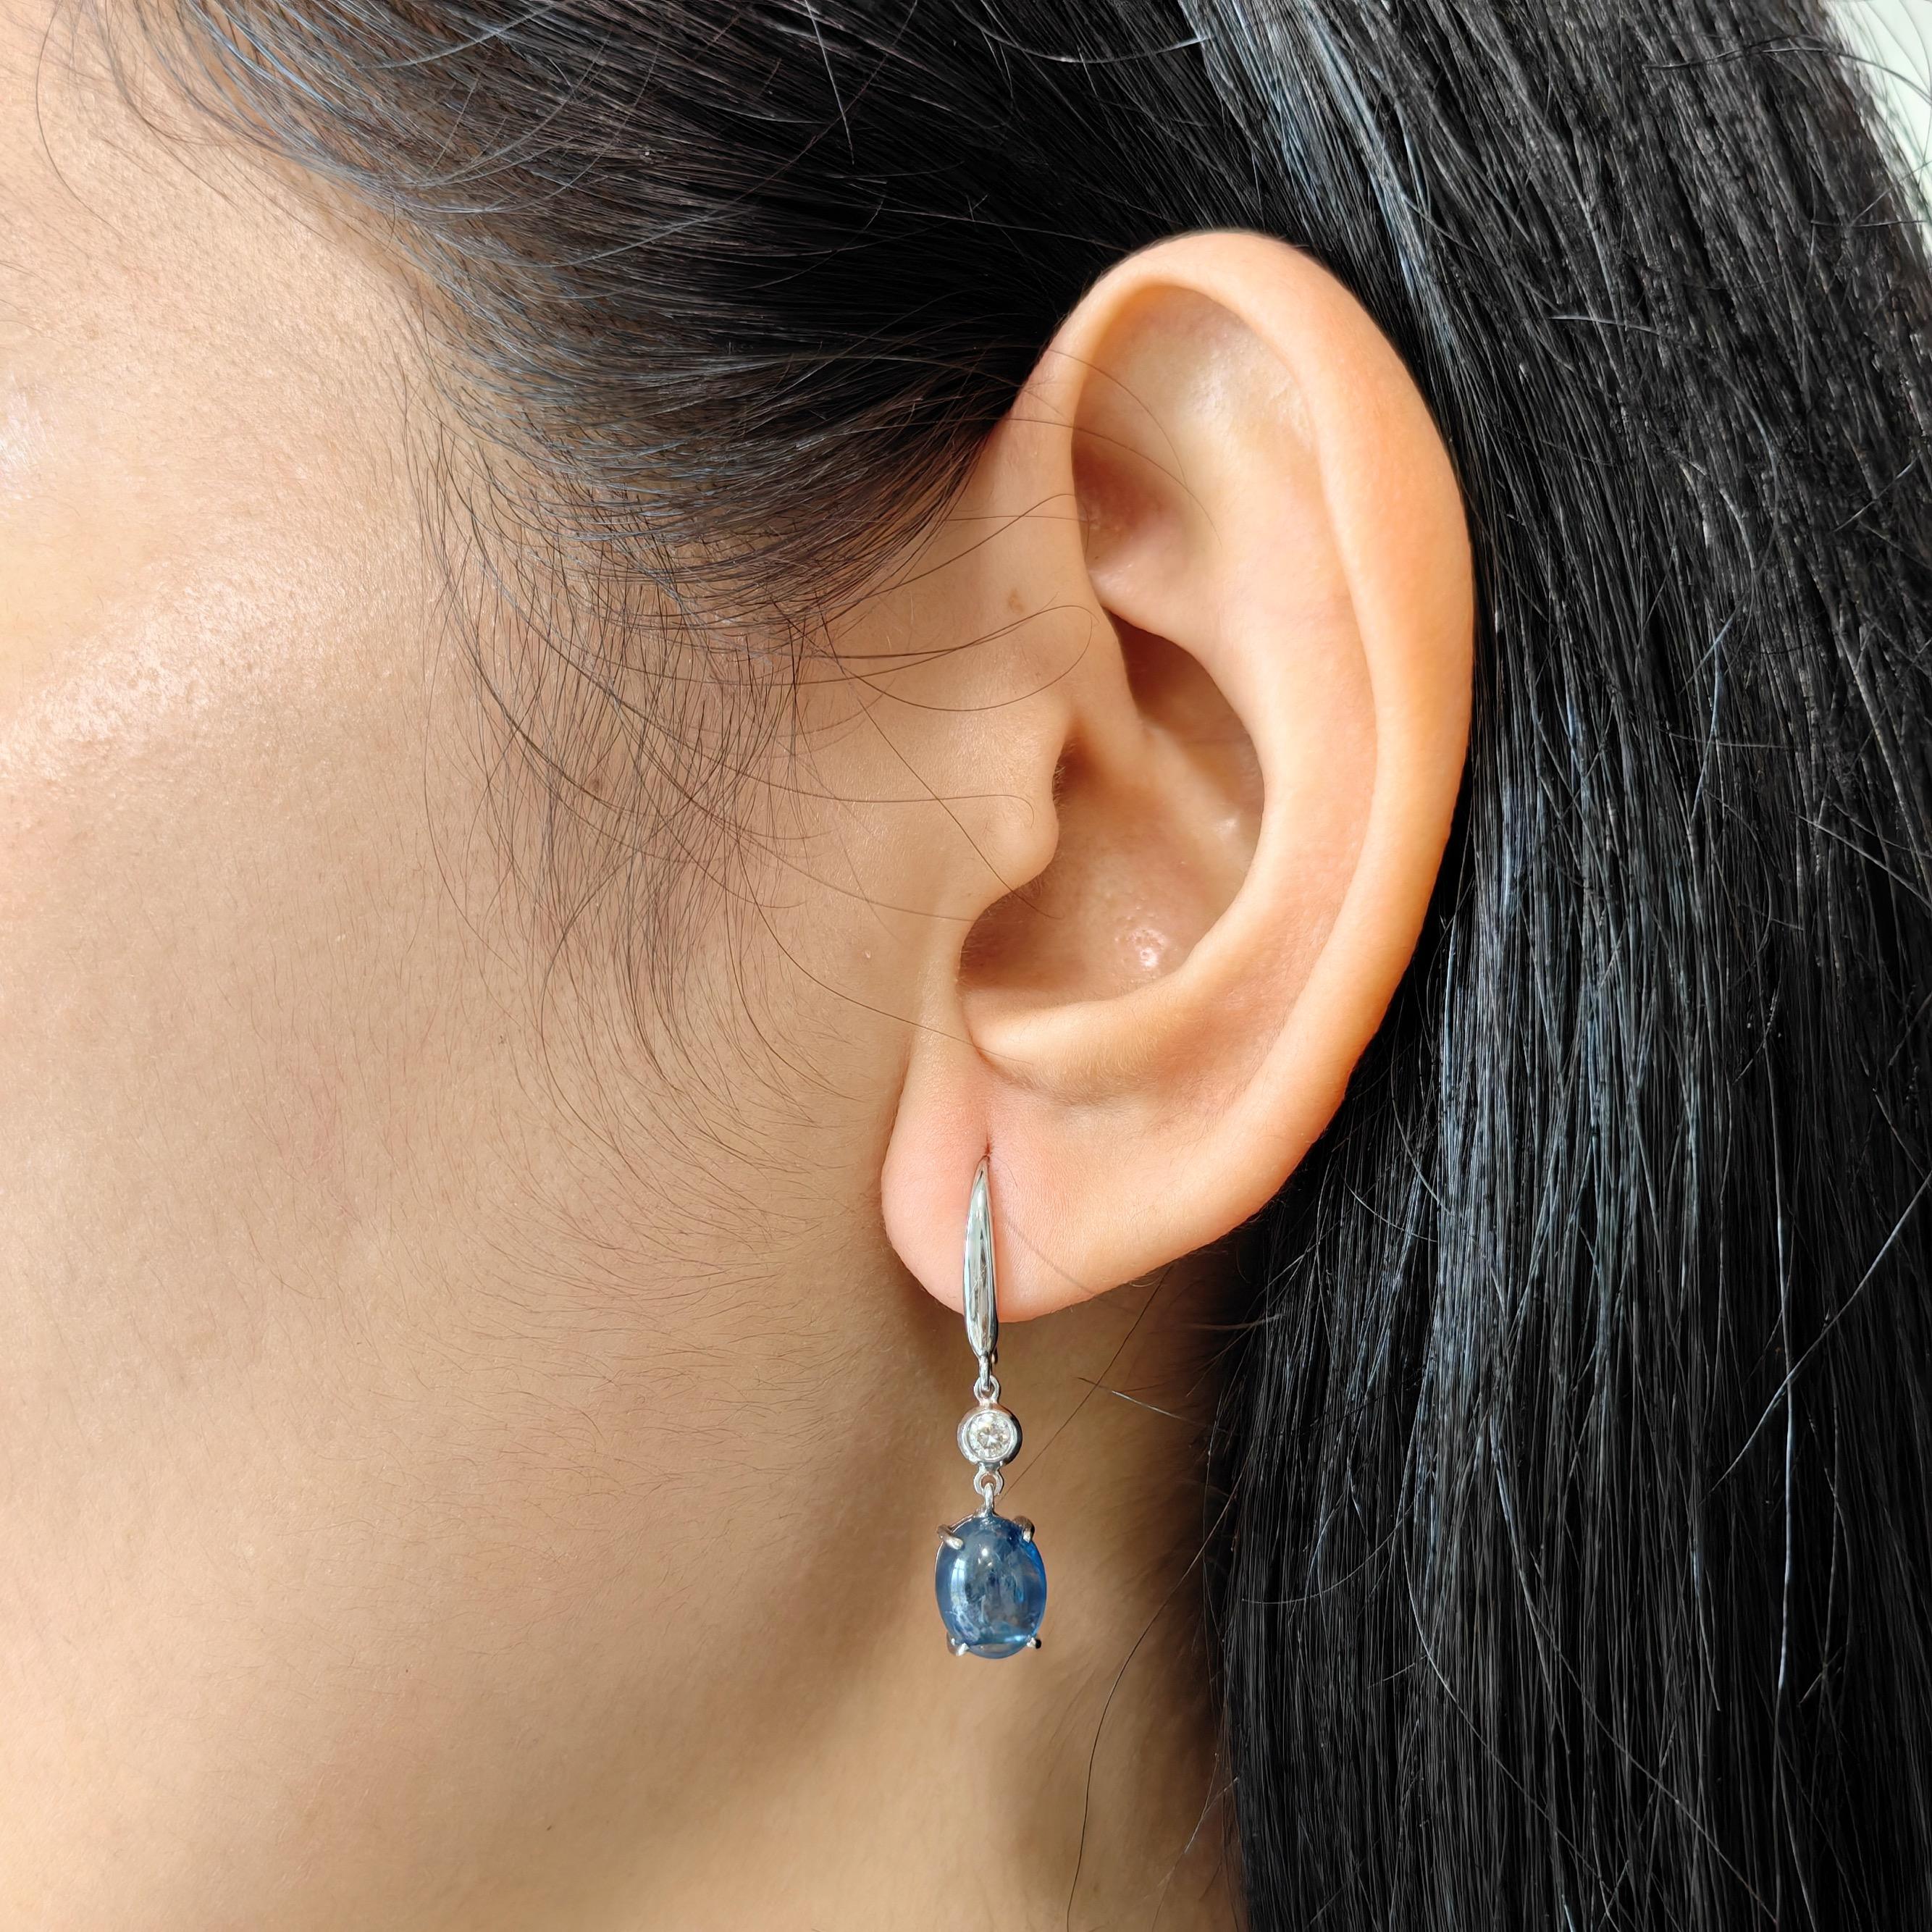 6.18ct Cabochon Blue Sapphire Diamond Dangling Earrings in 18K White Gold 2